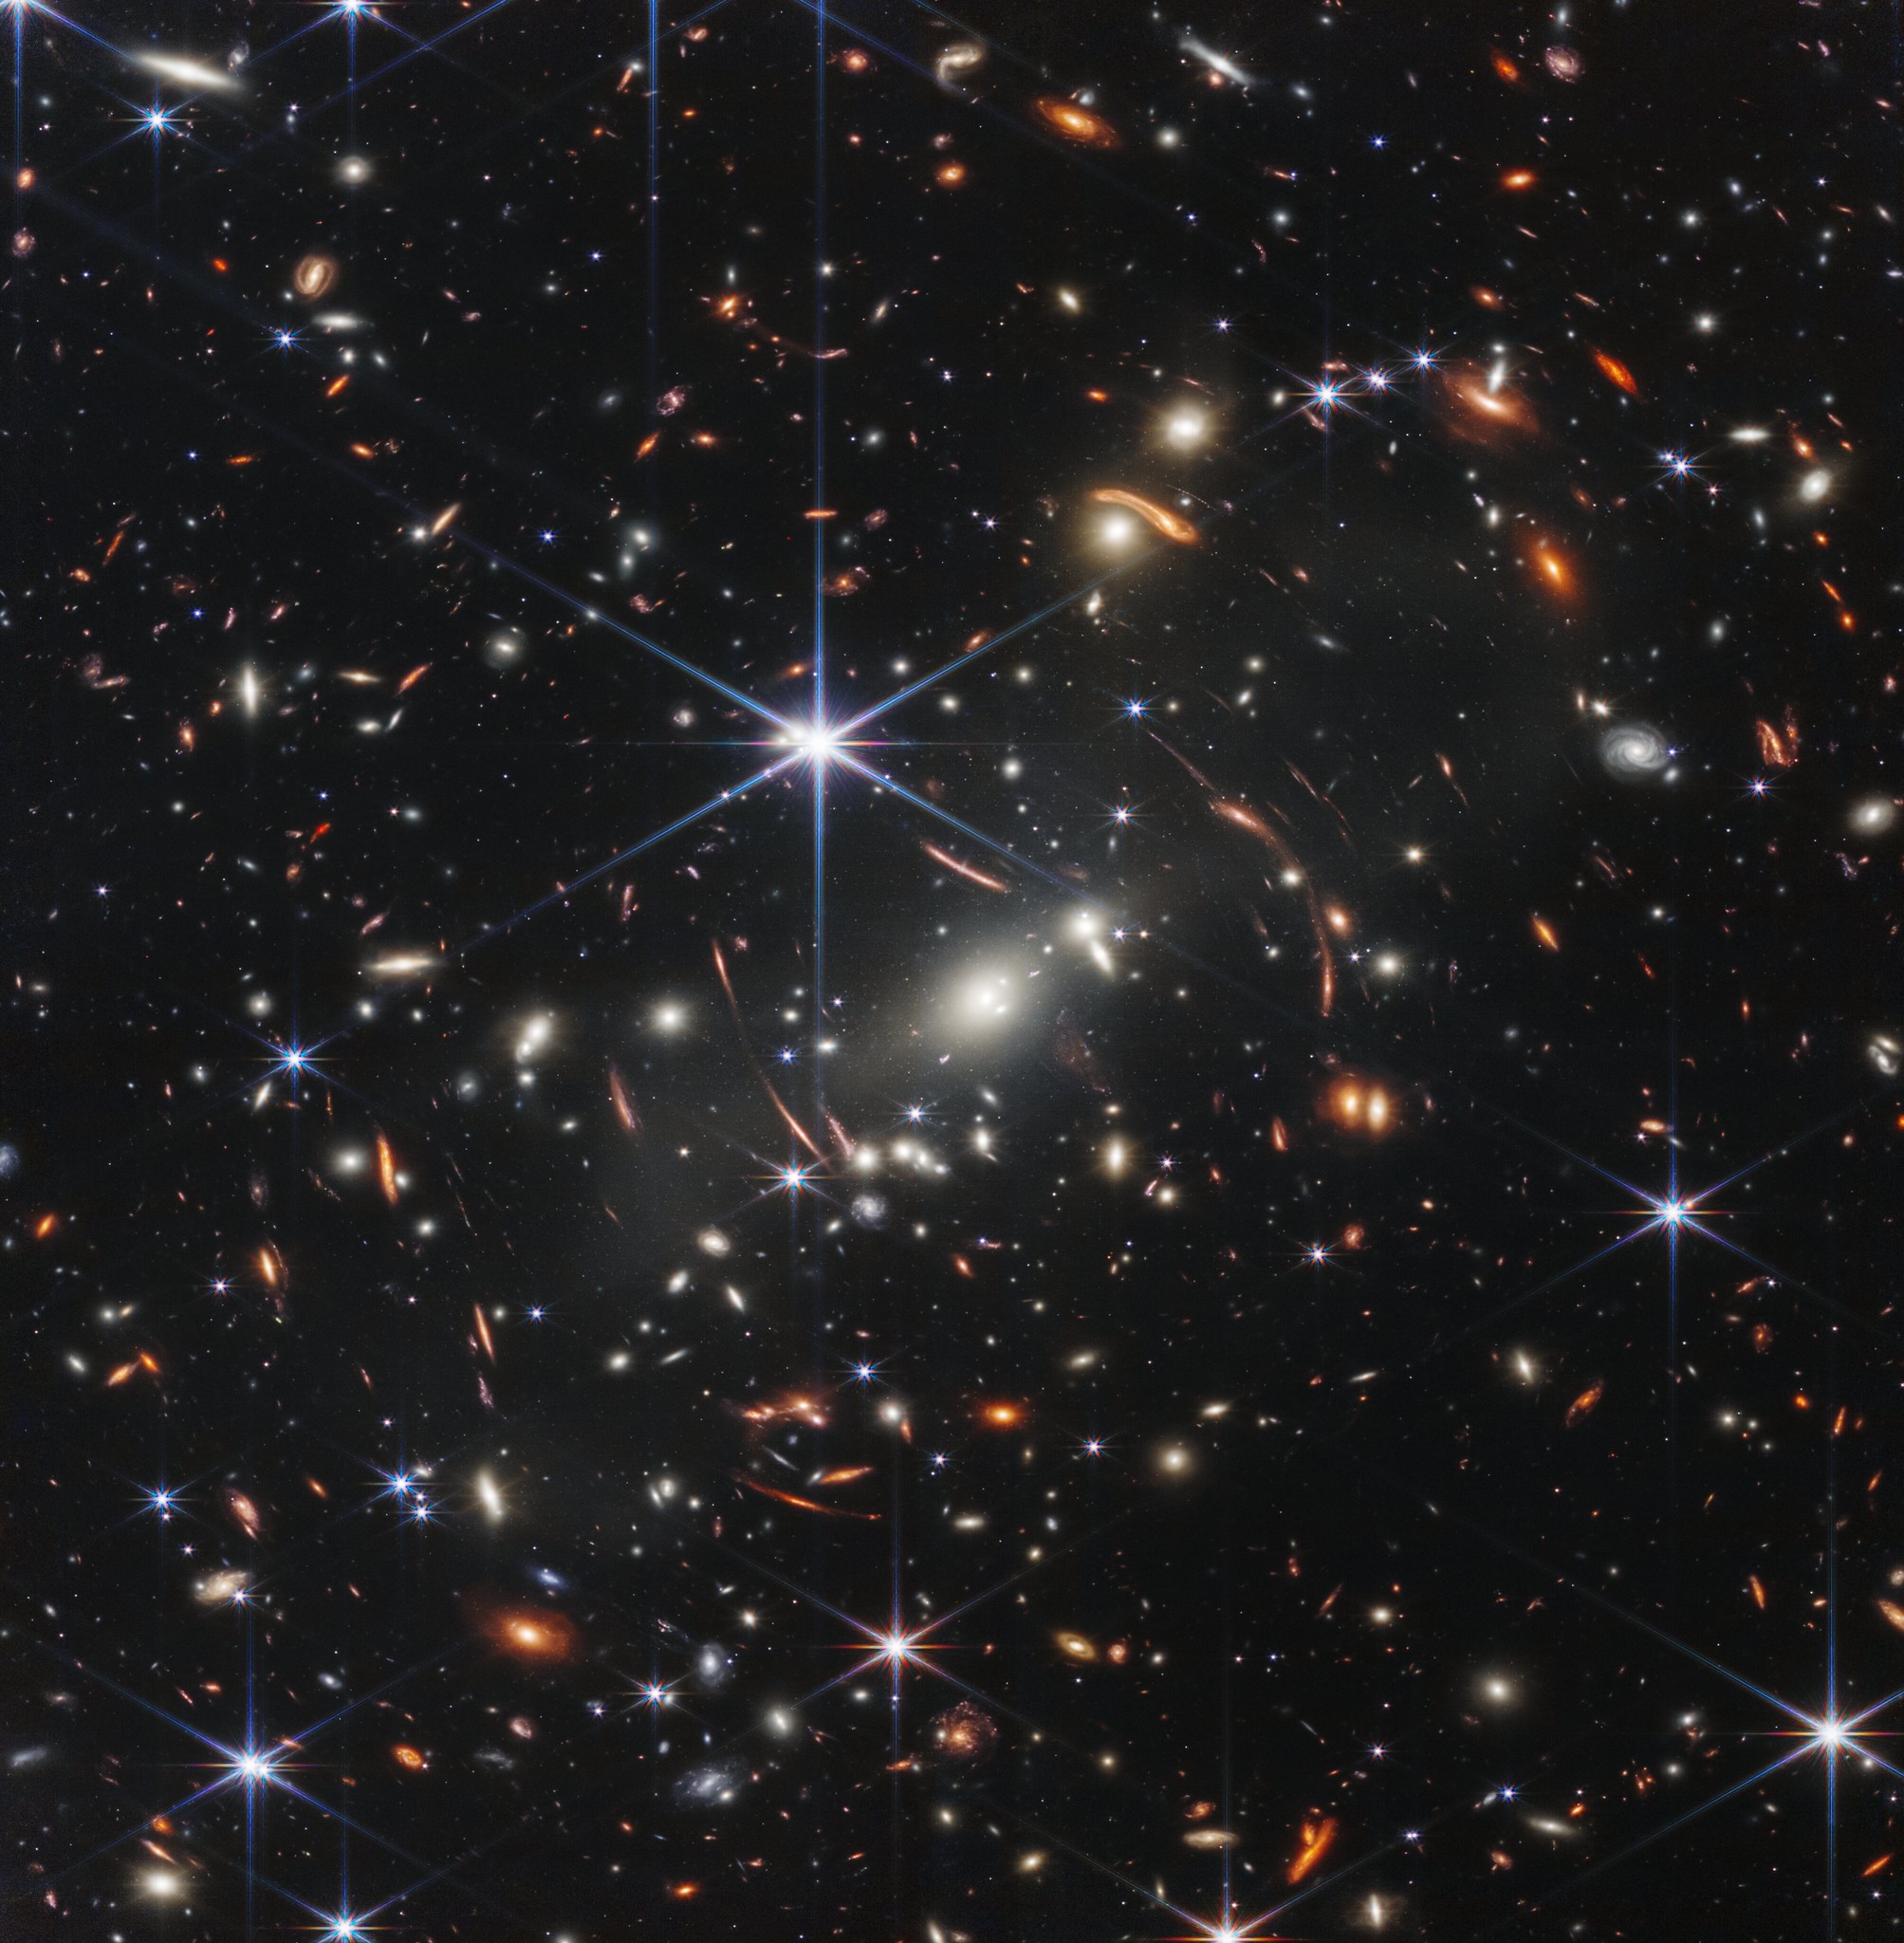 Universe of Galaxies
James Webb Space Telescope, NASA